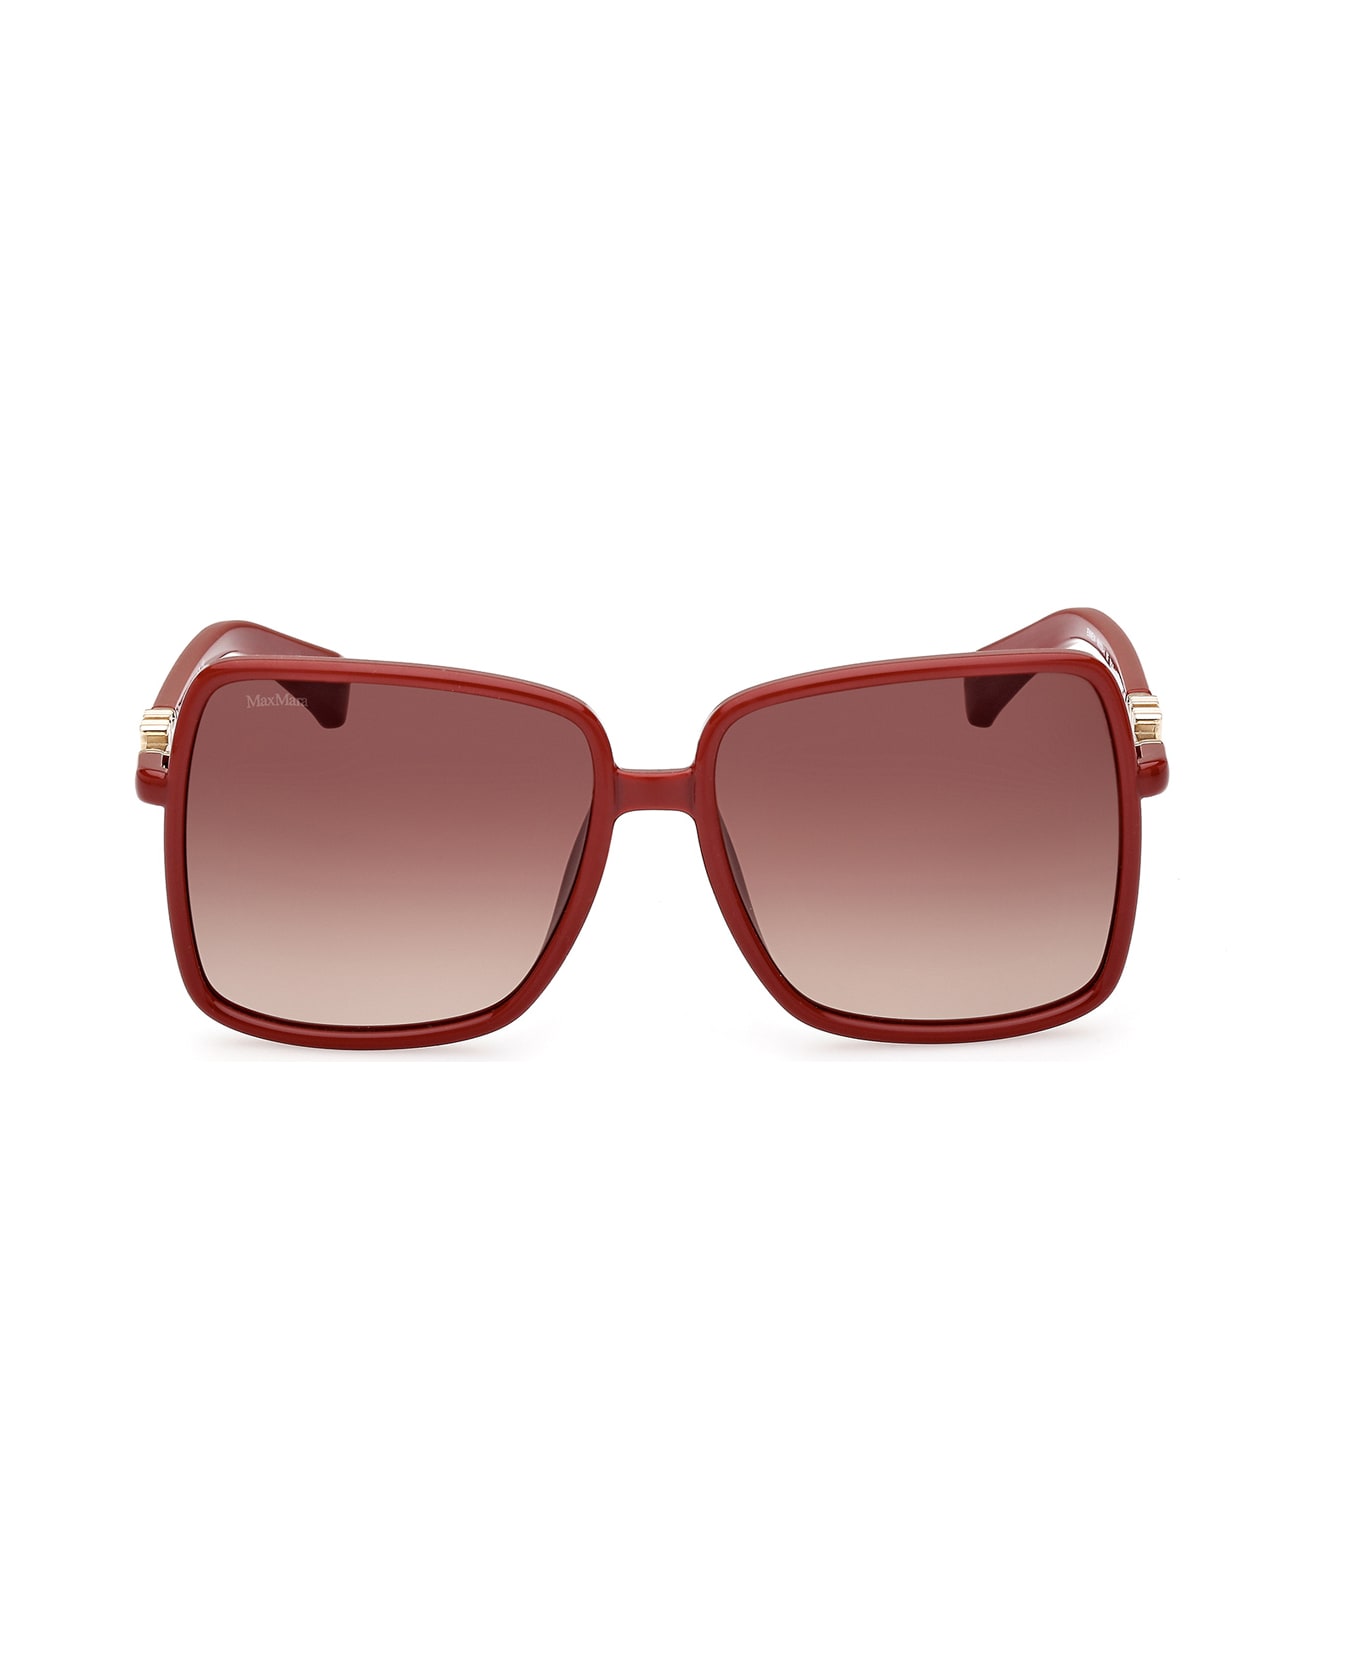 Max Mara Maxmara Mm0064 66f Sunglasses - Rosso サングラス